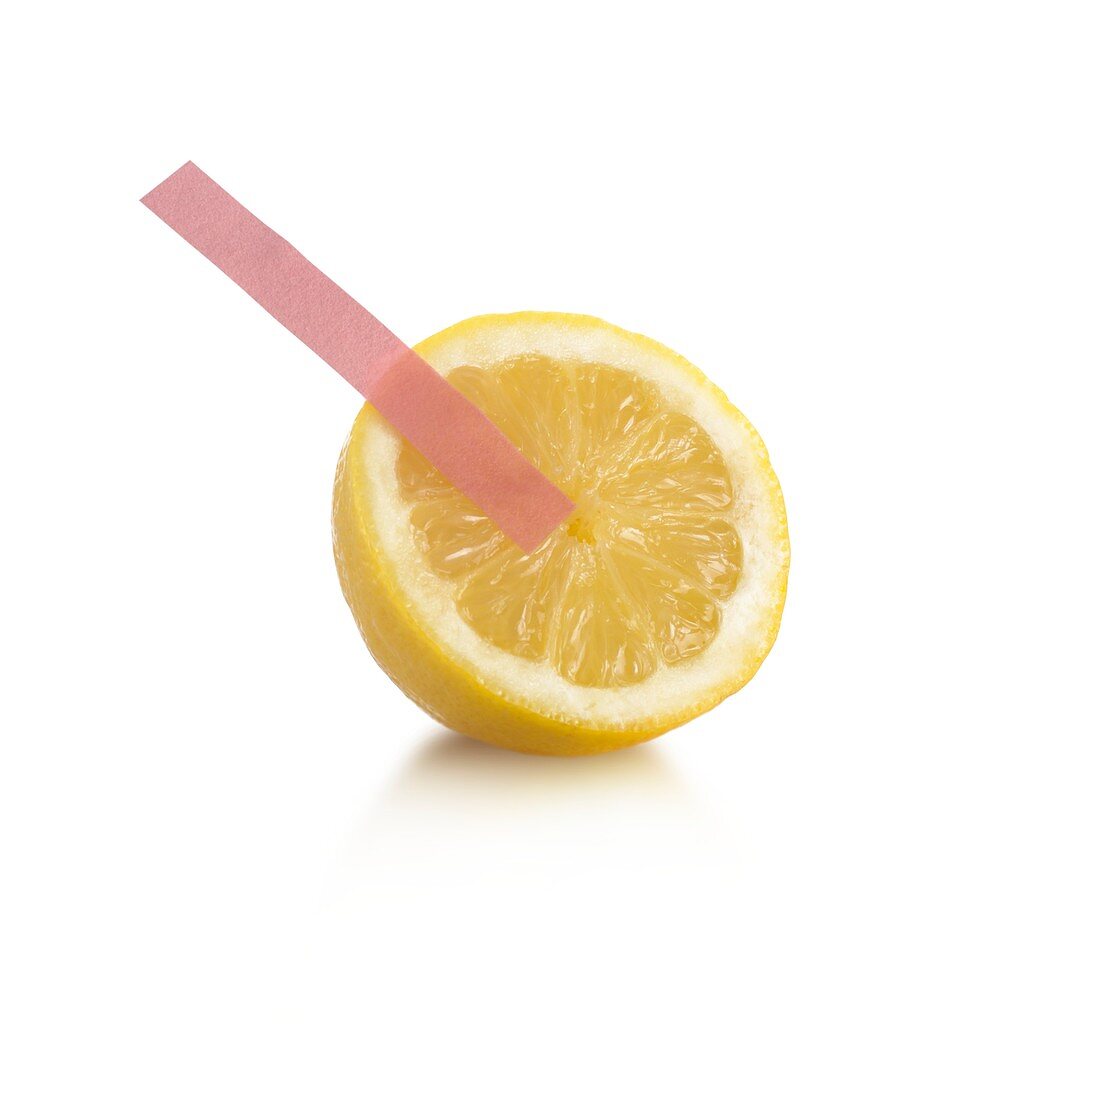 Litmus paper test on a lemon